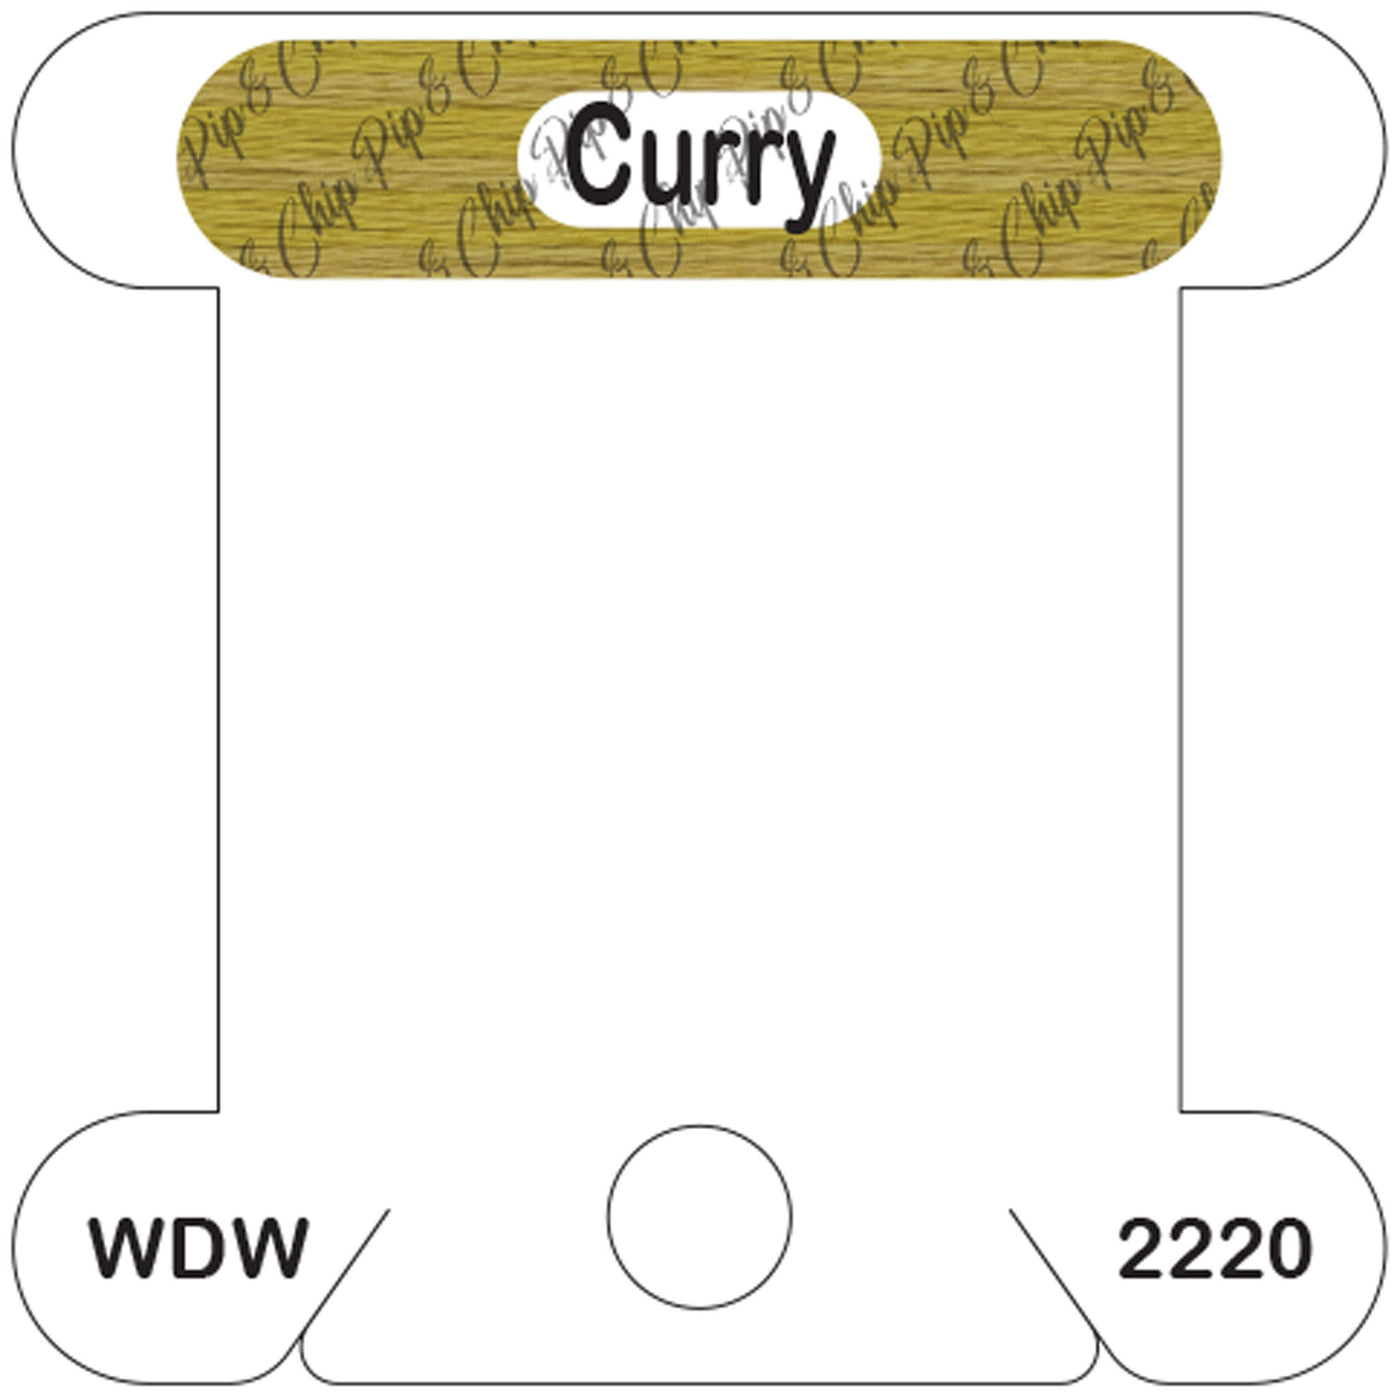 WDW Curry acrylic bobbin